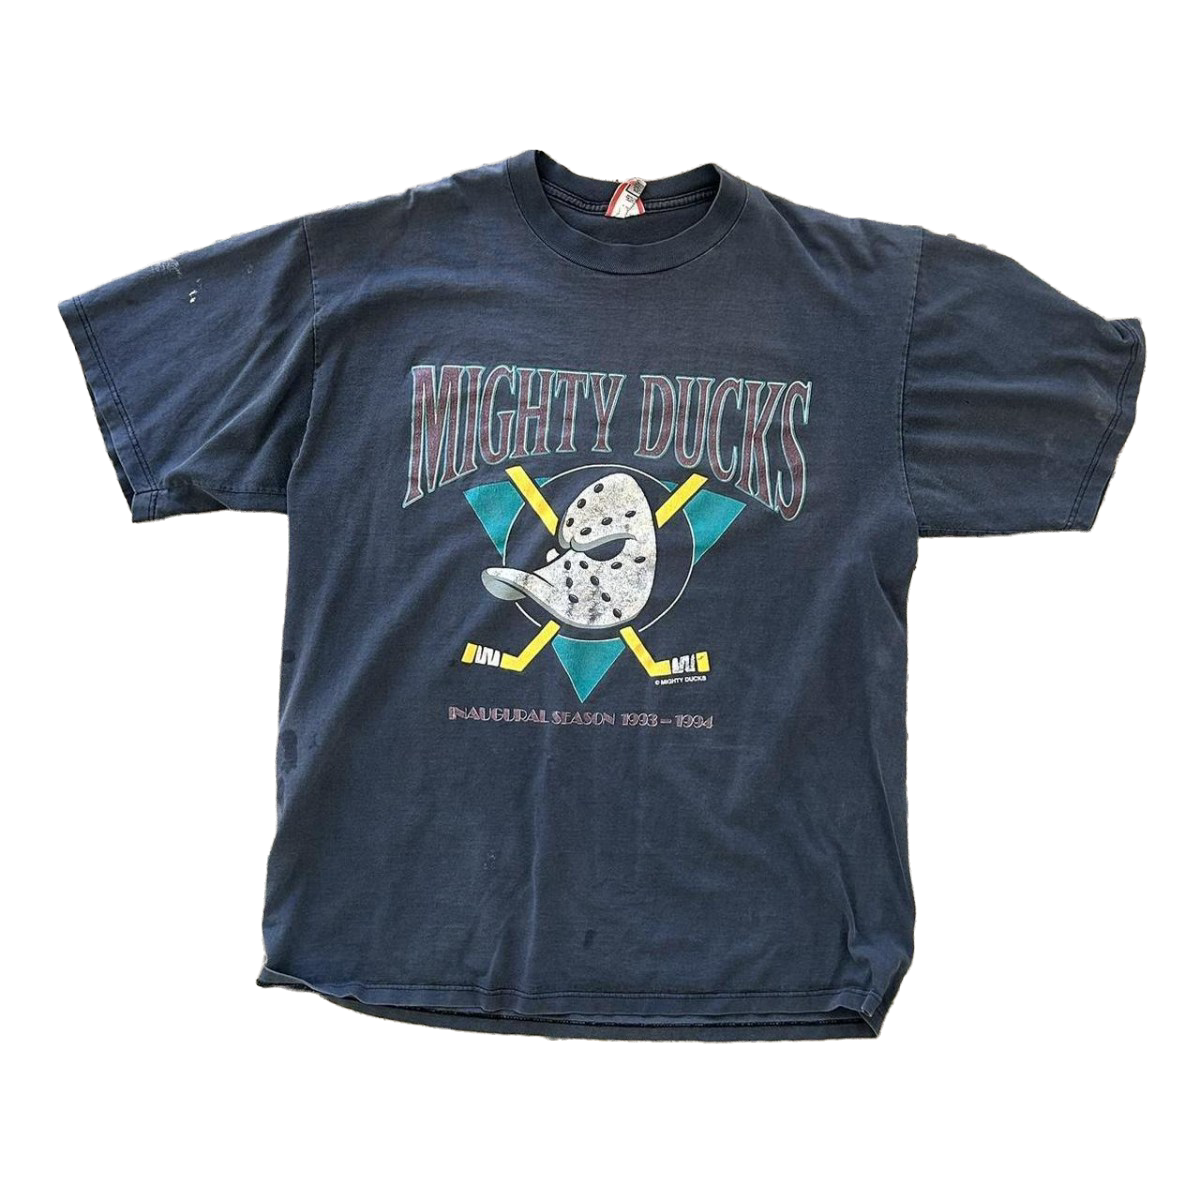 Vintage 1990s Mighty Ducks Tee